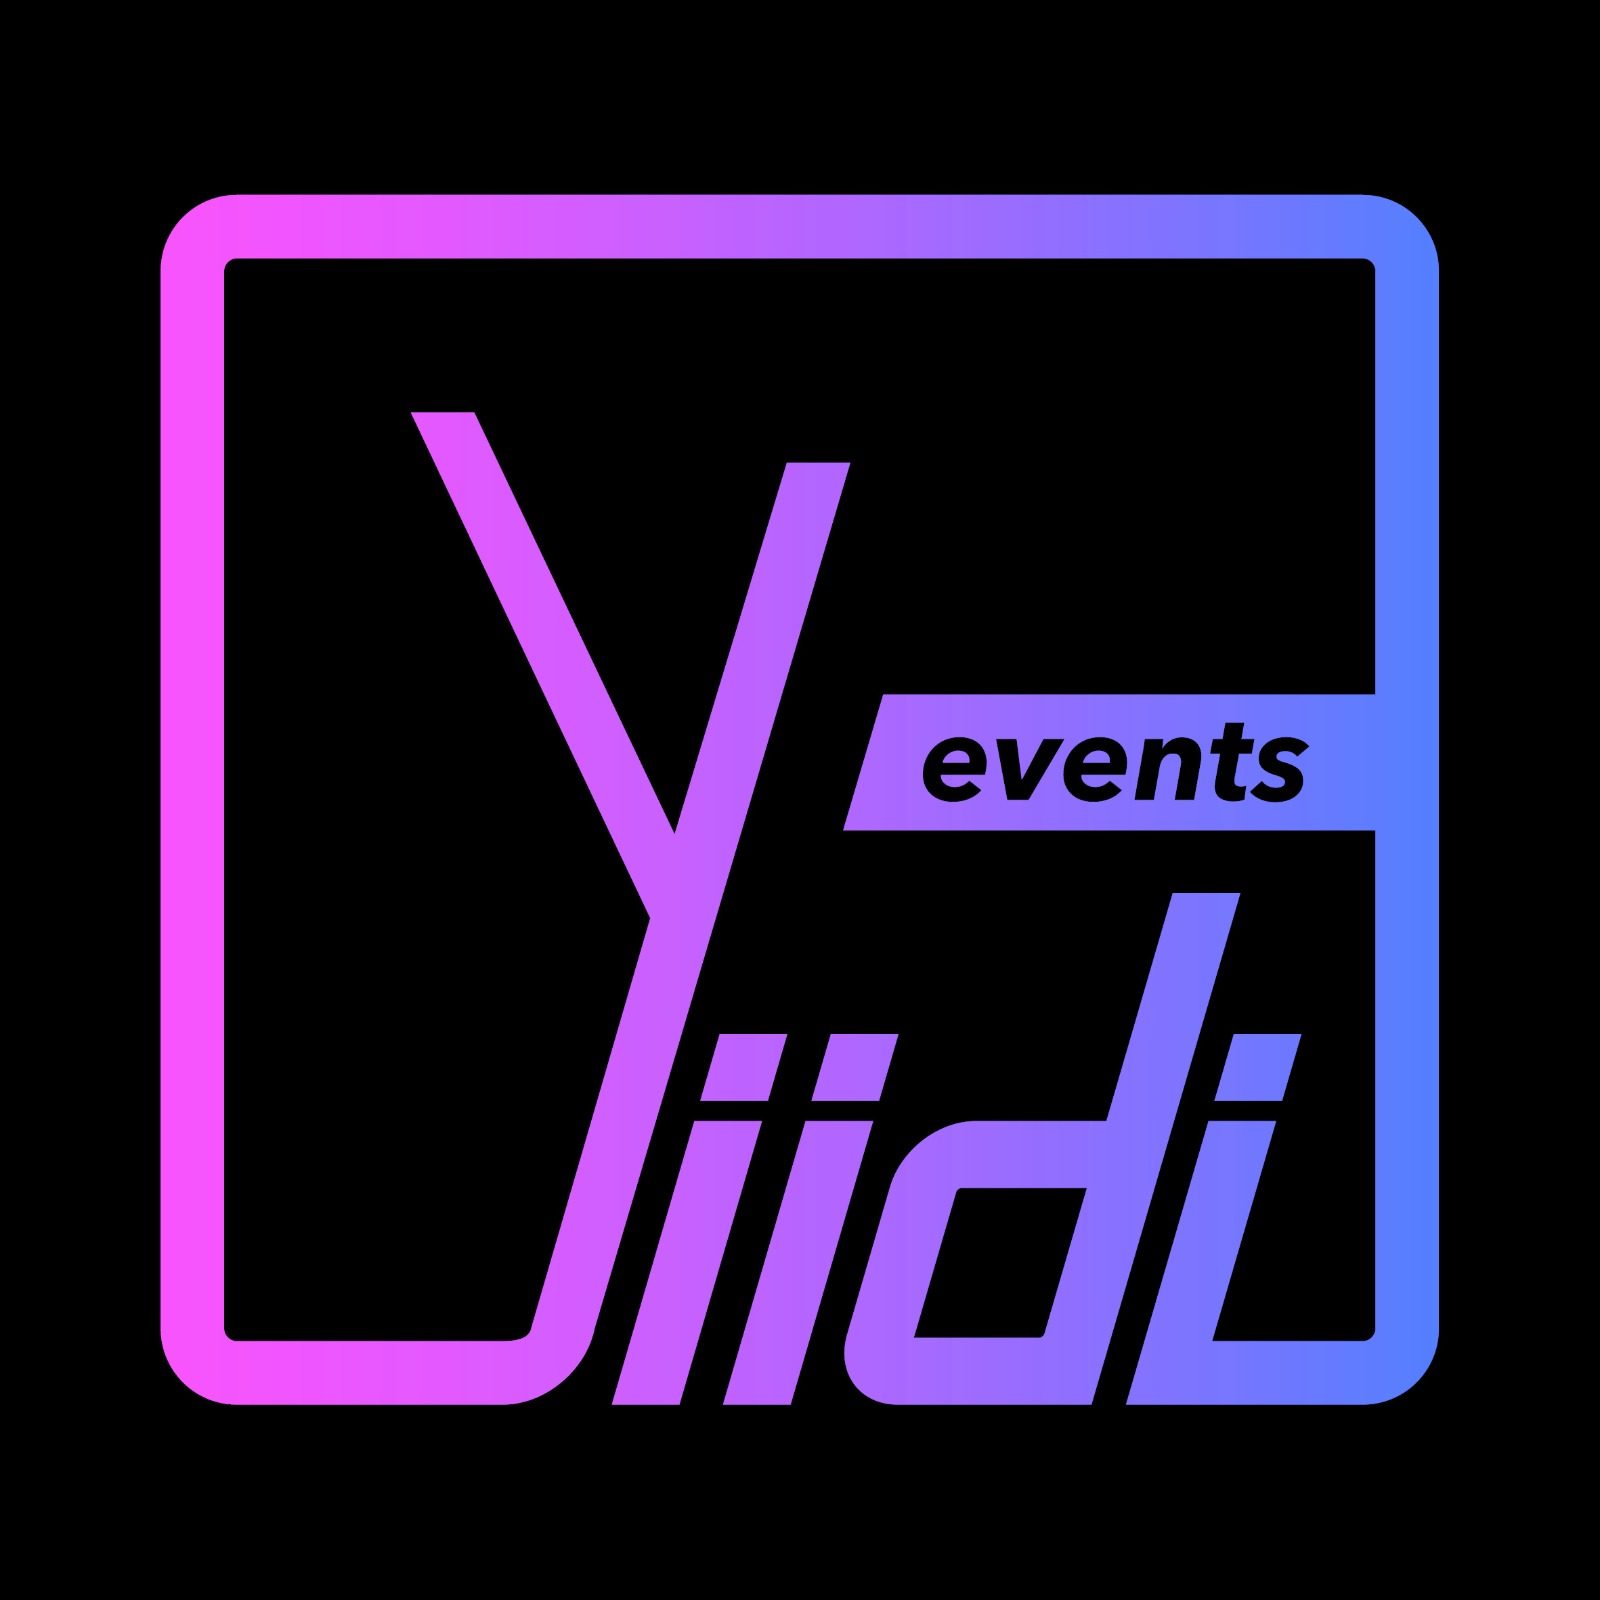 YIIDI EVENTS